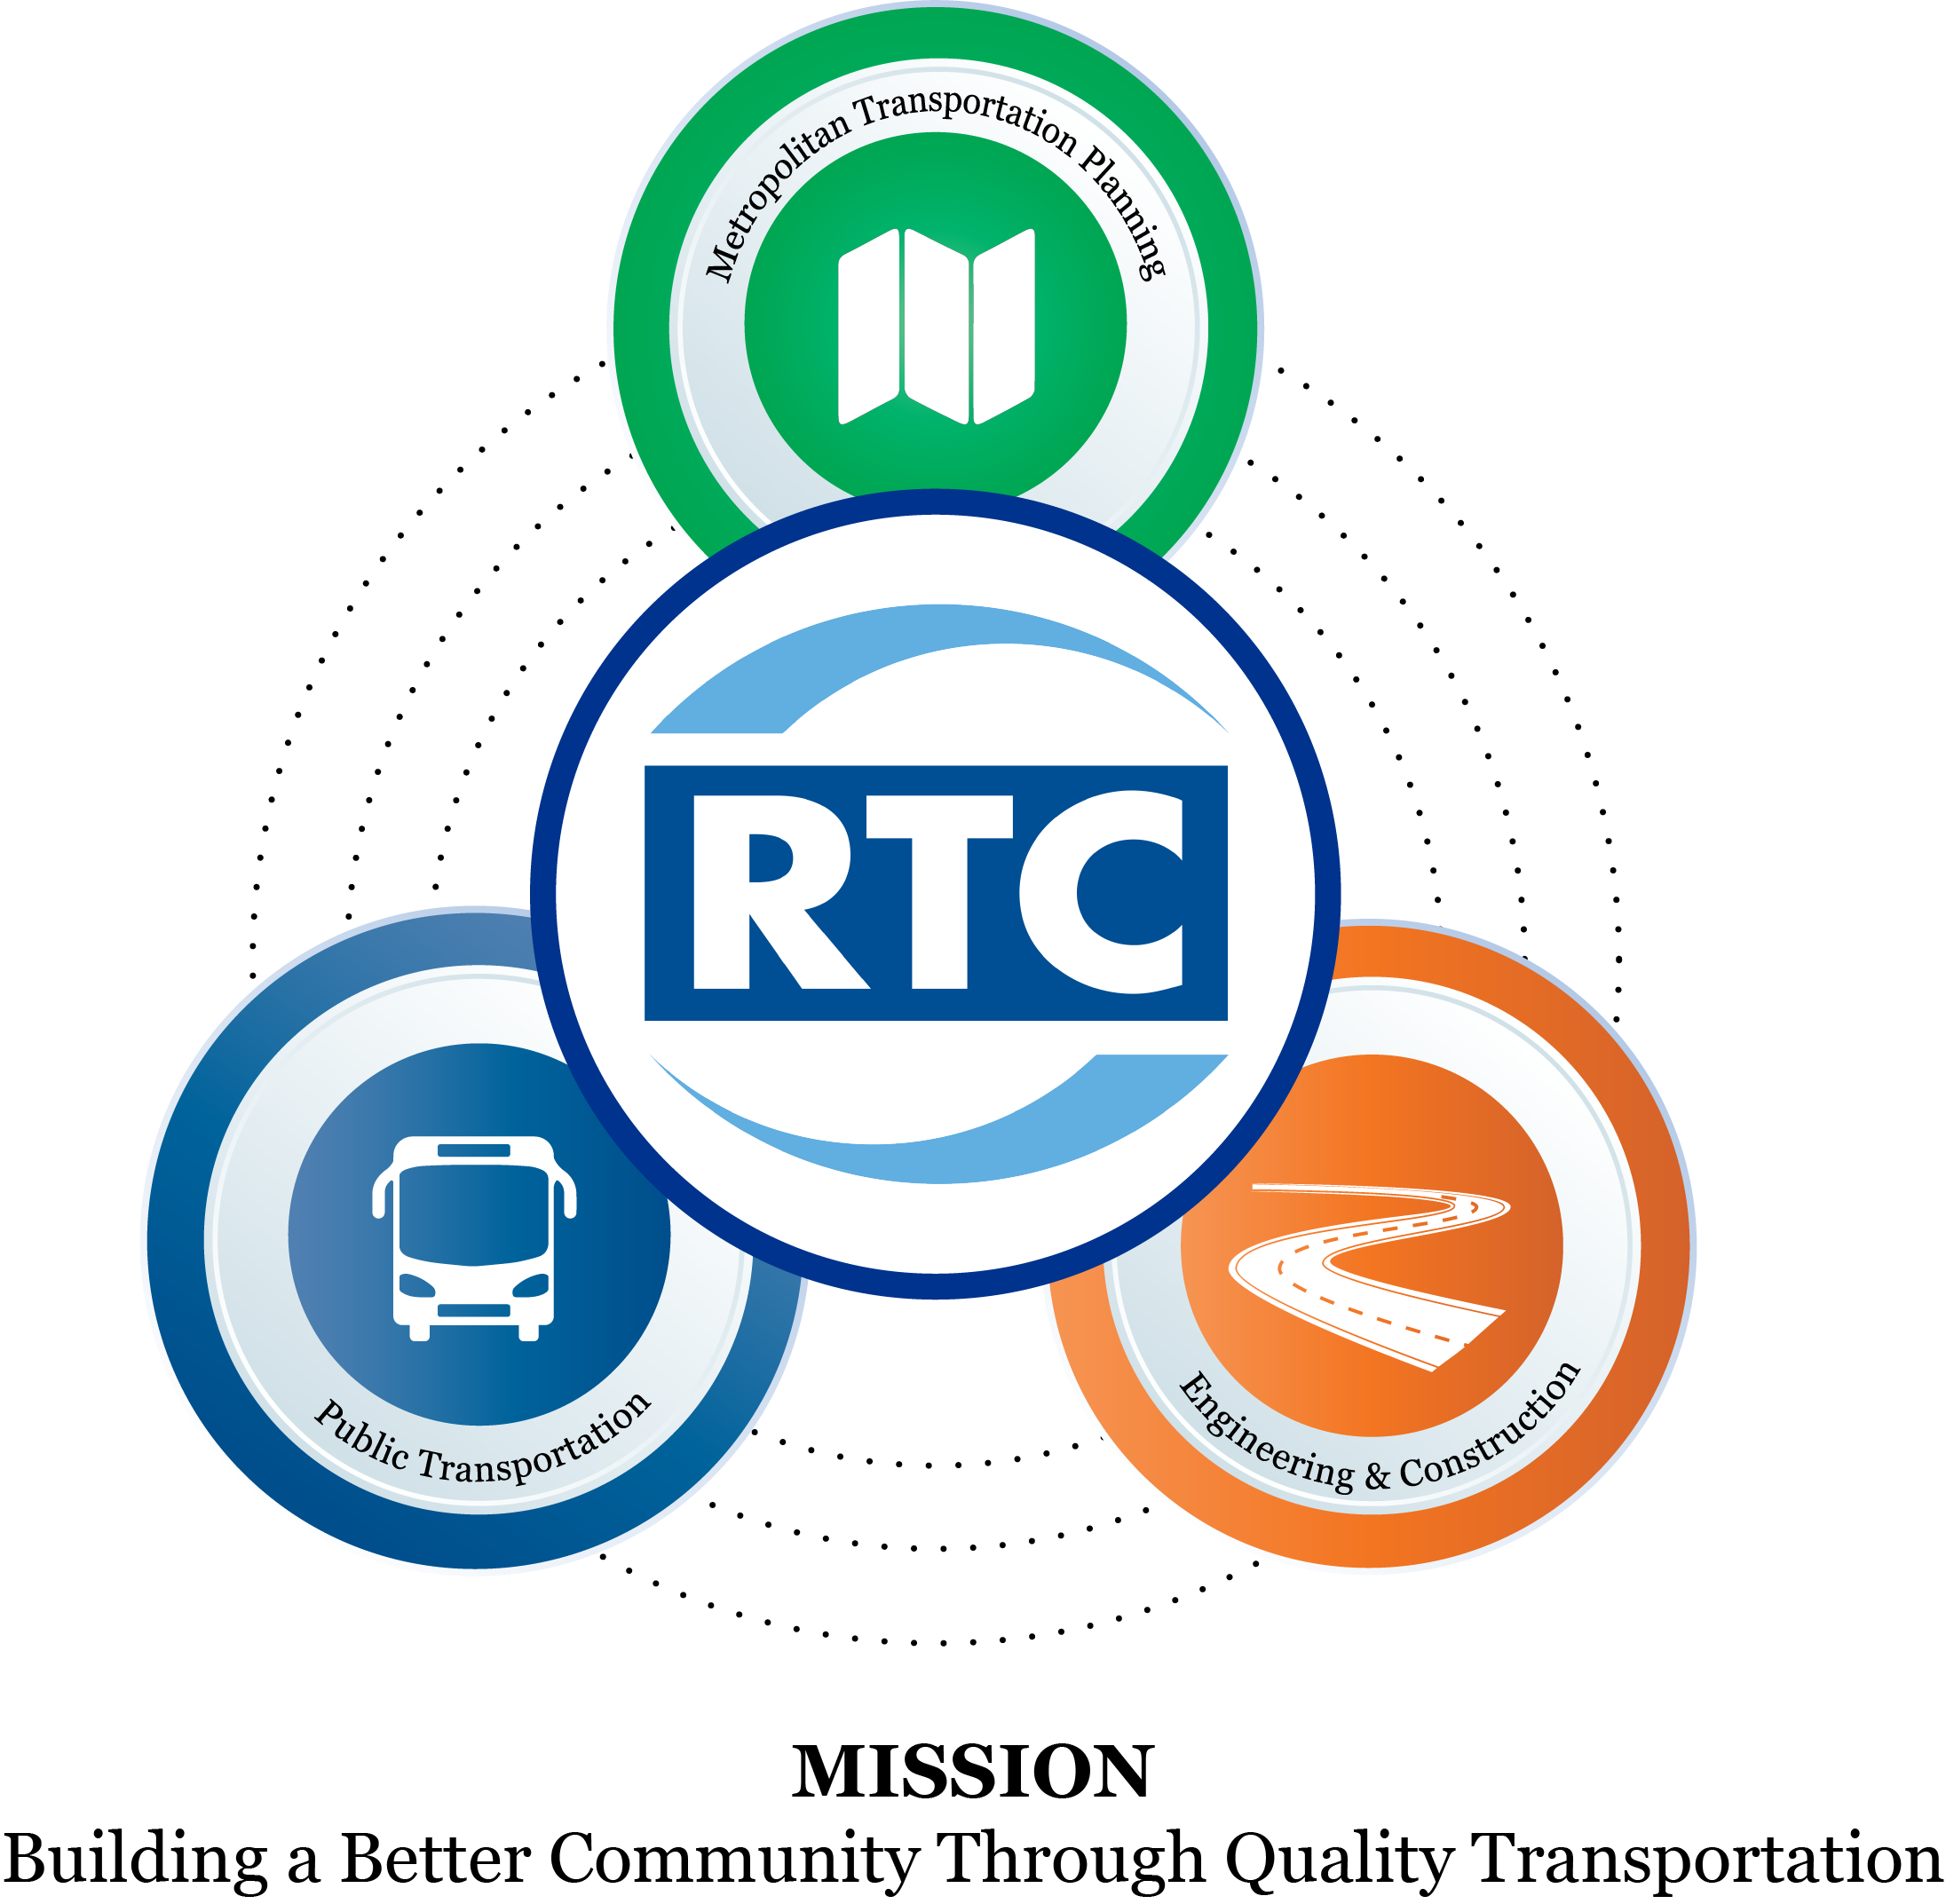 RTC Core Functions Infographic